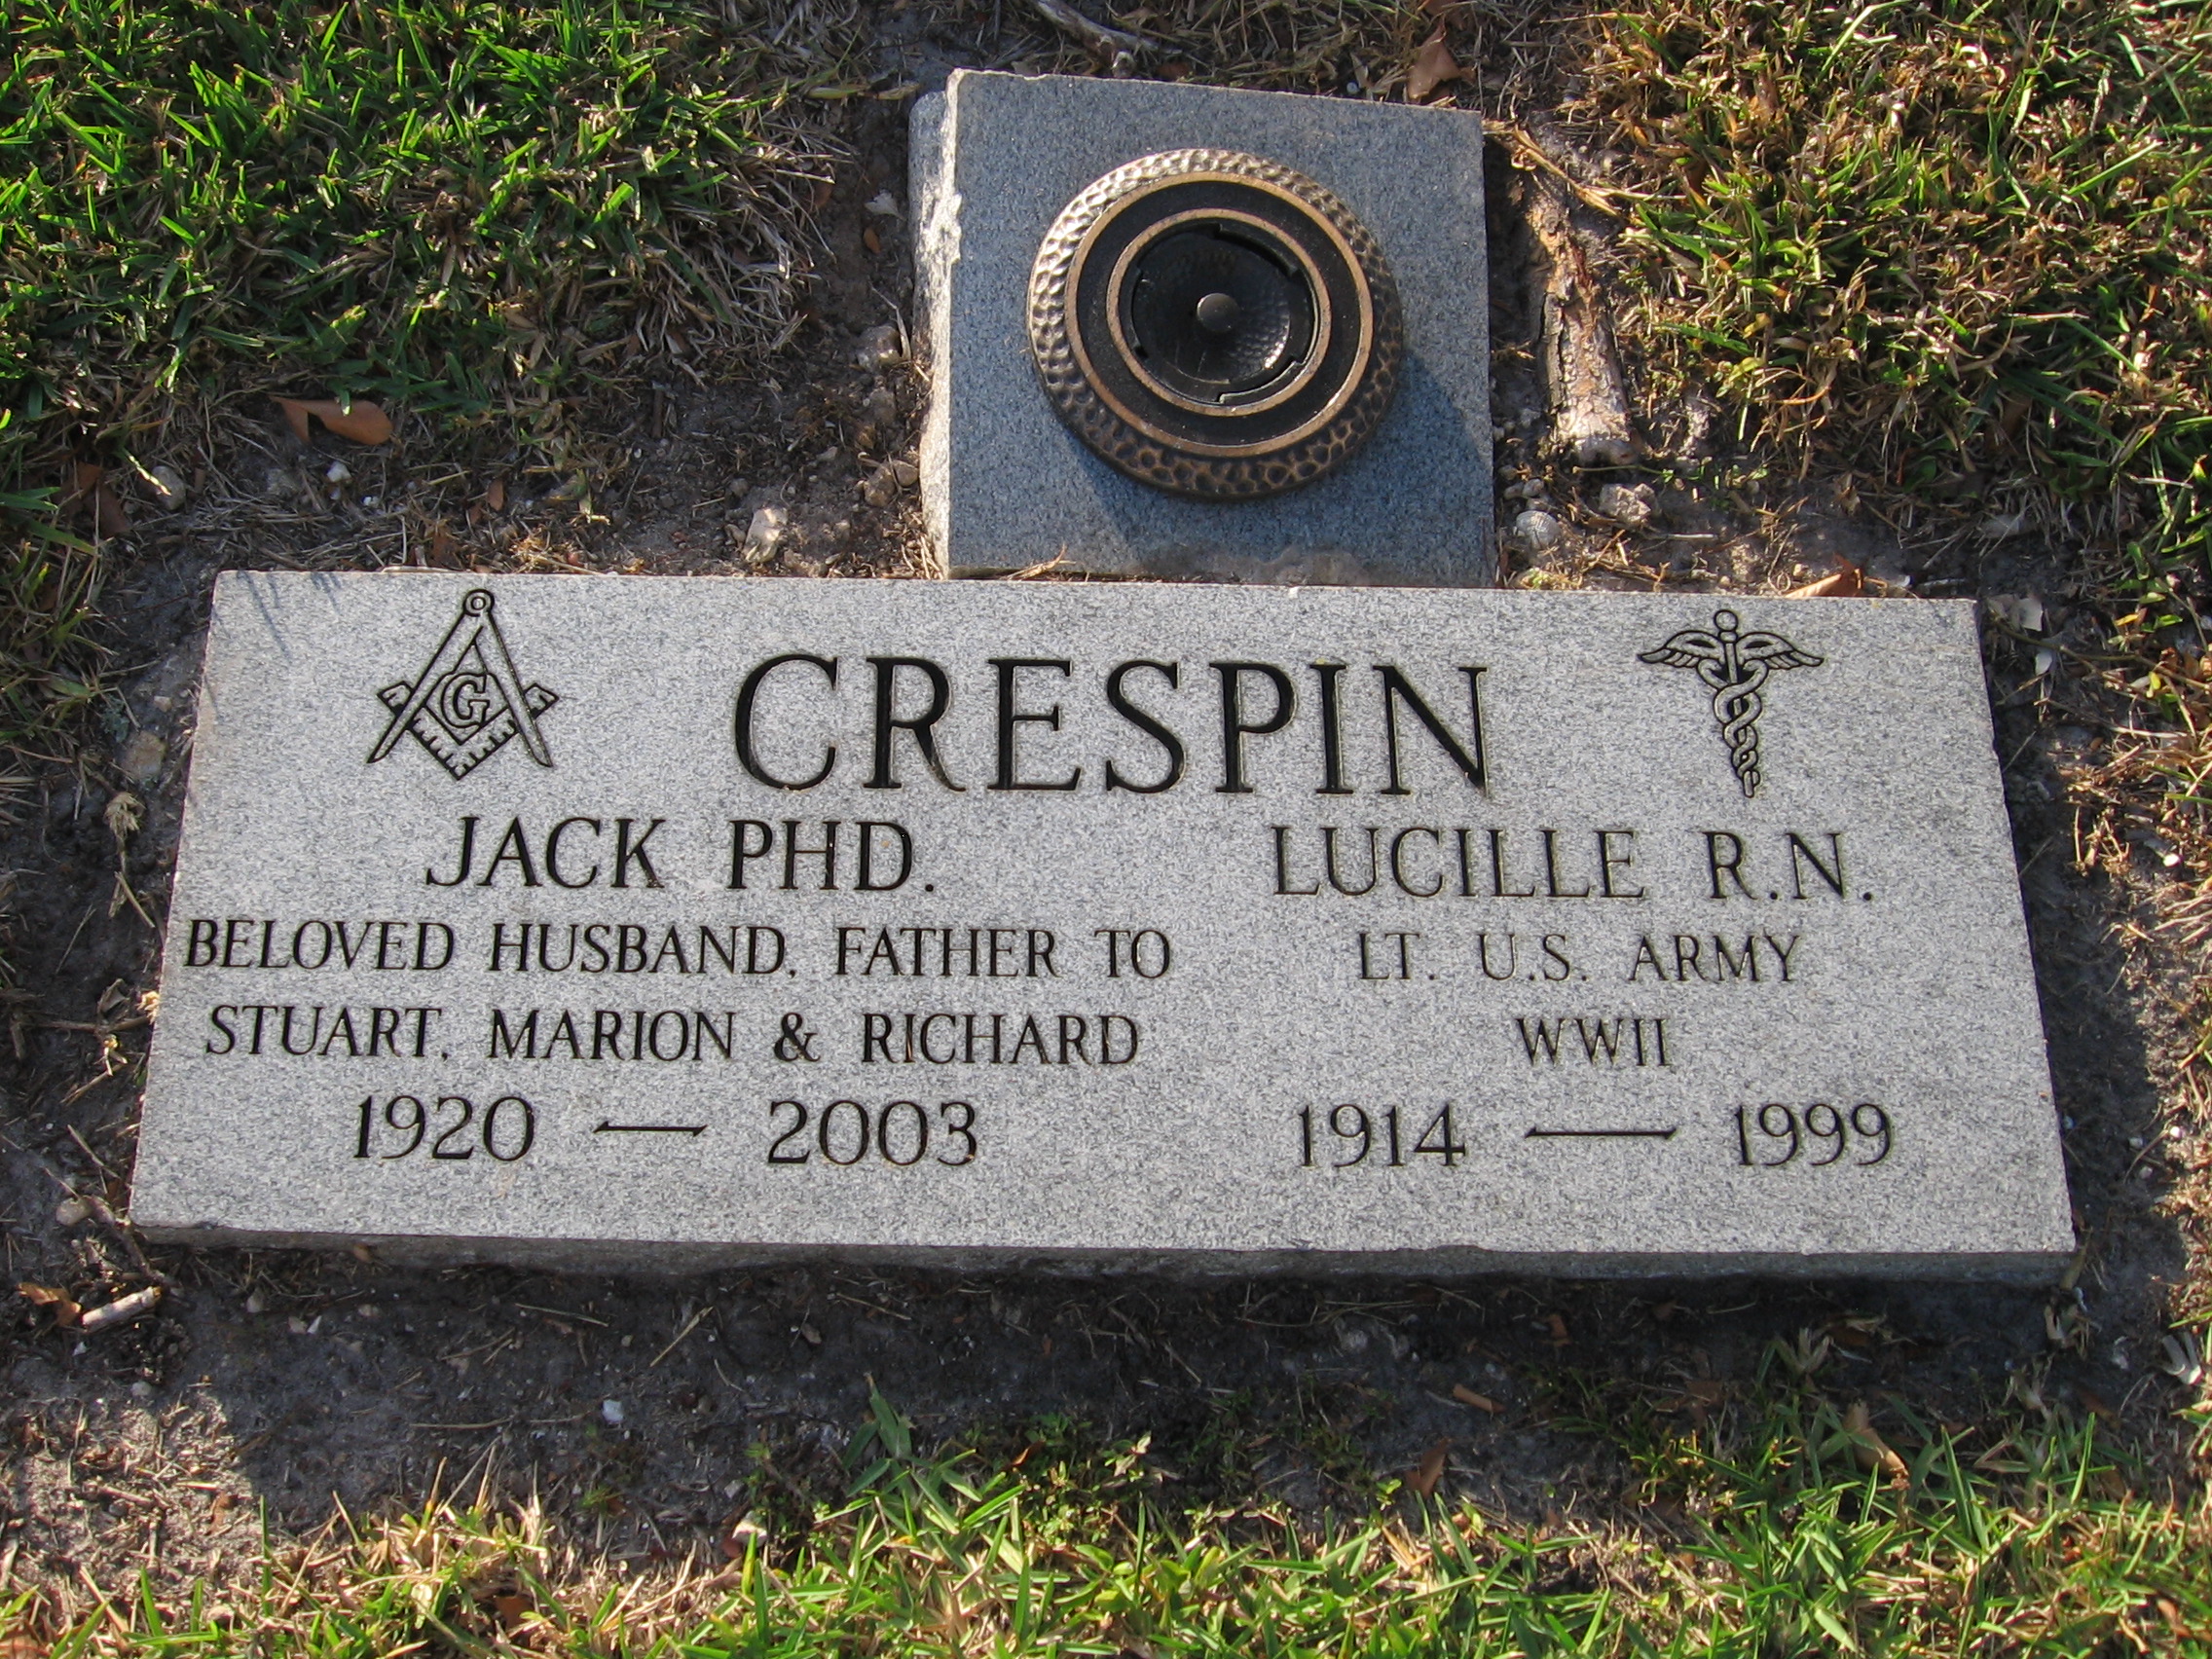 Jack Crespin